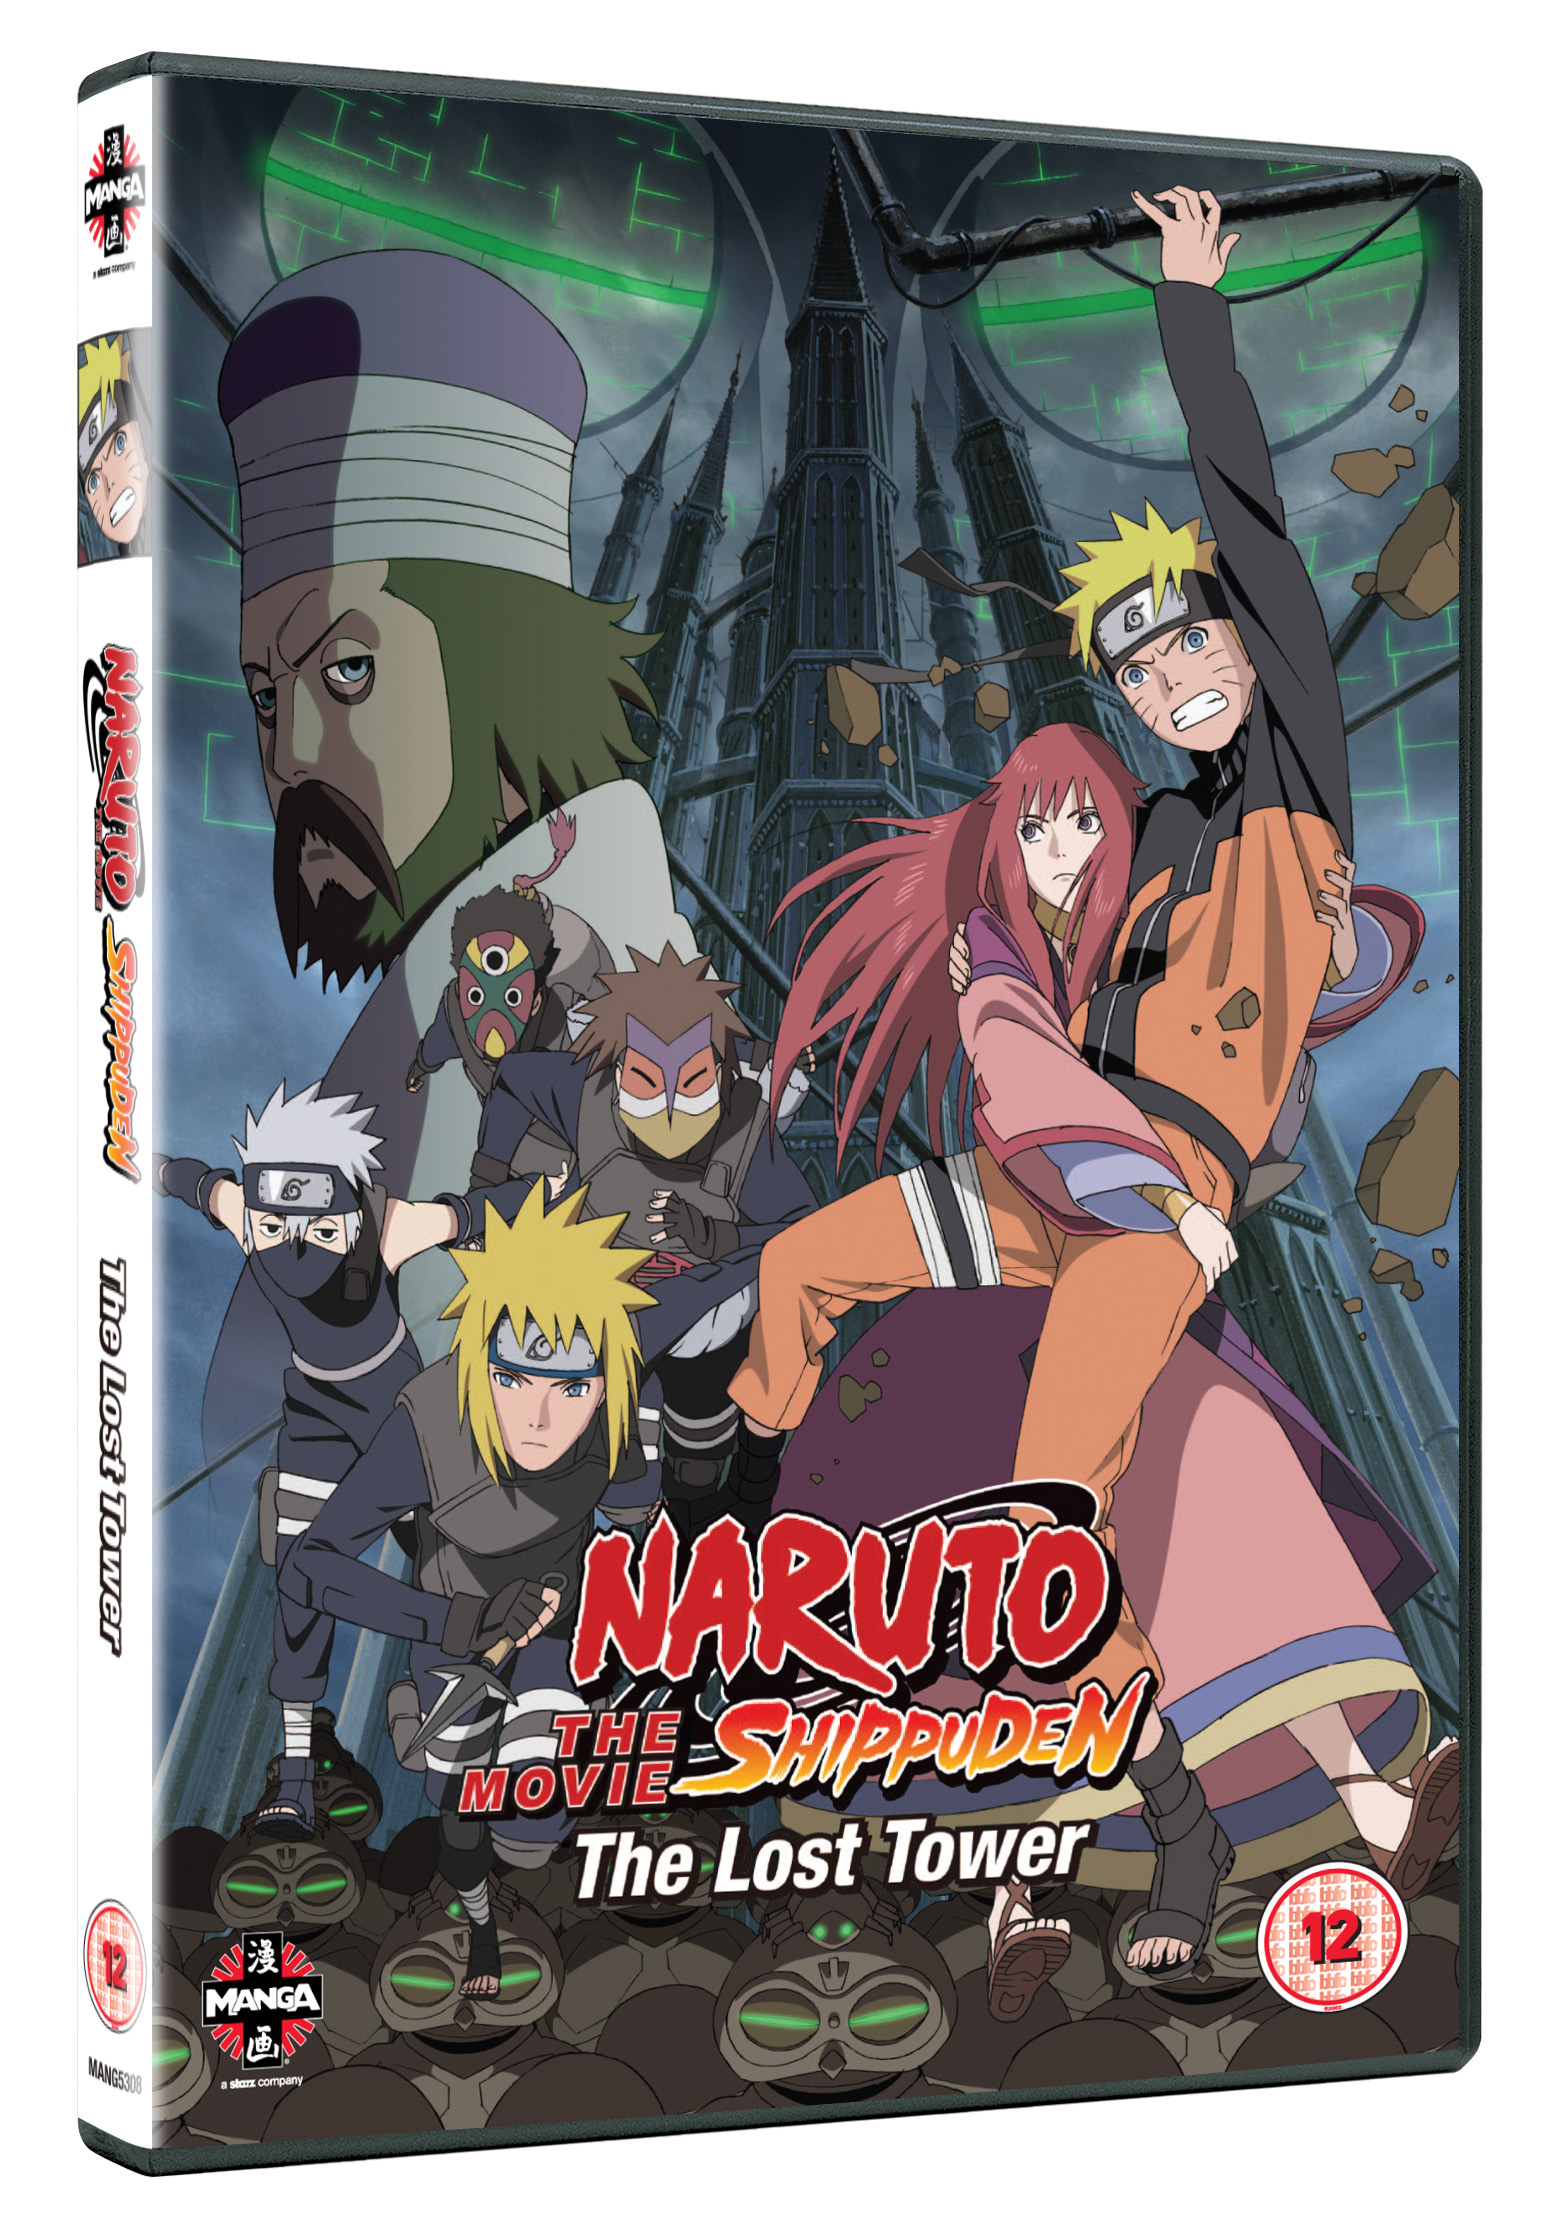 Naruto Shippuden movie 4 The Lost Tower